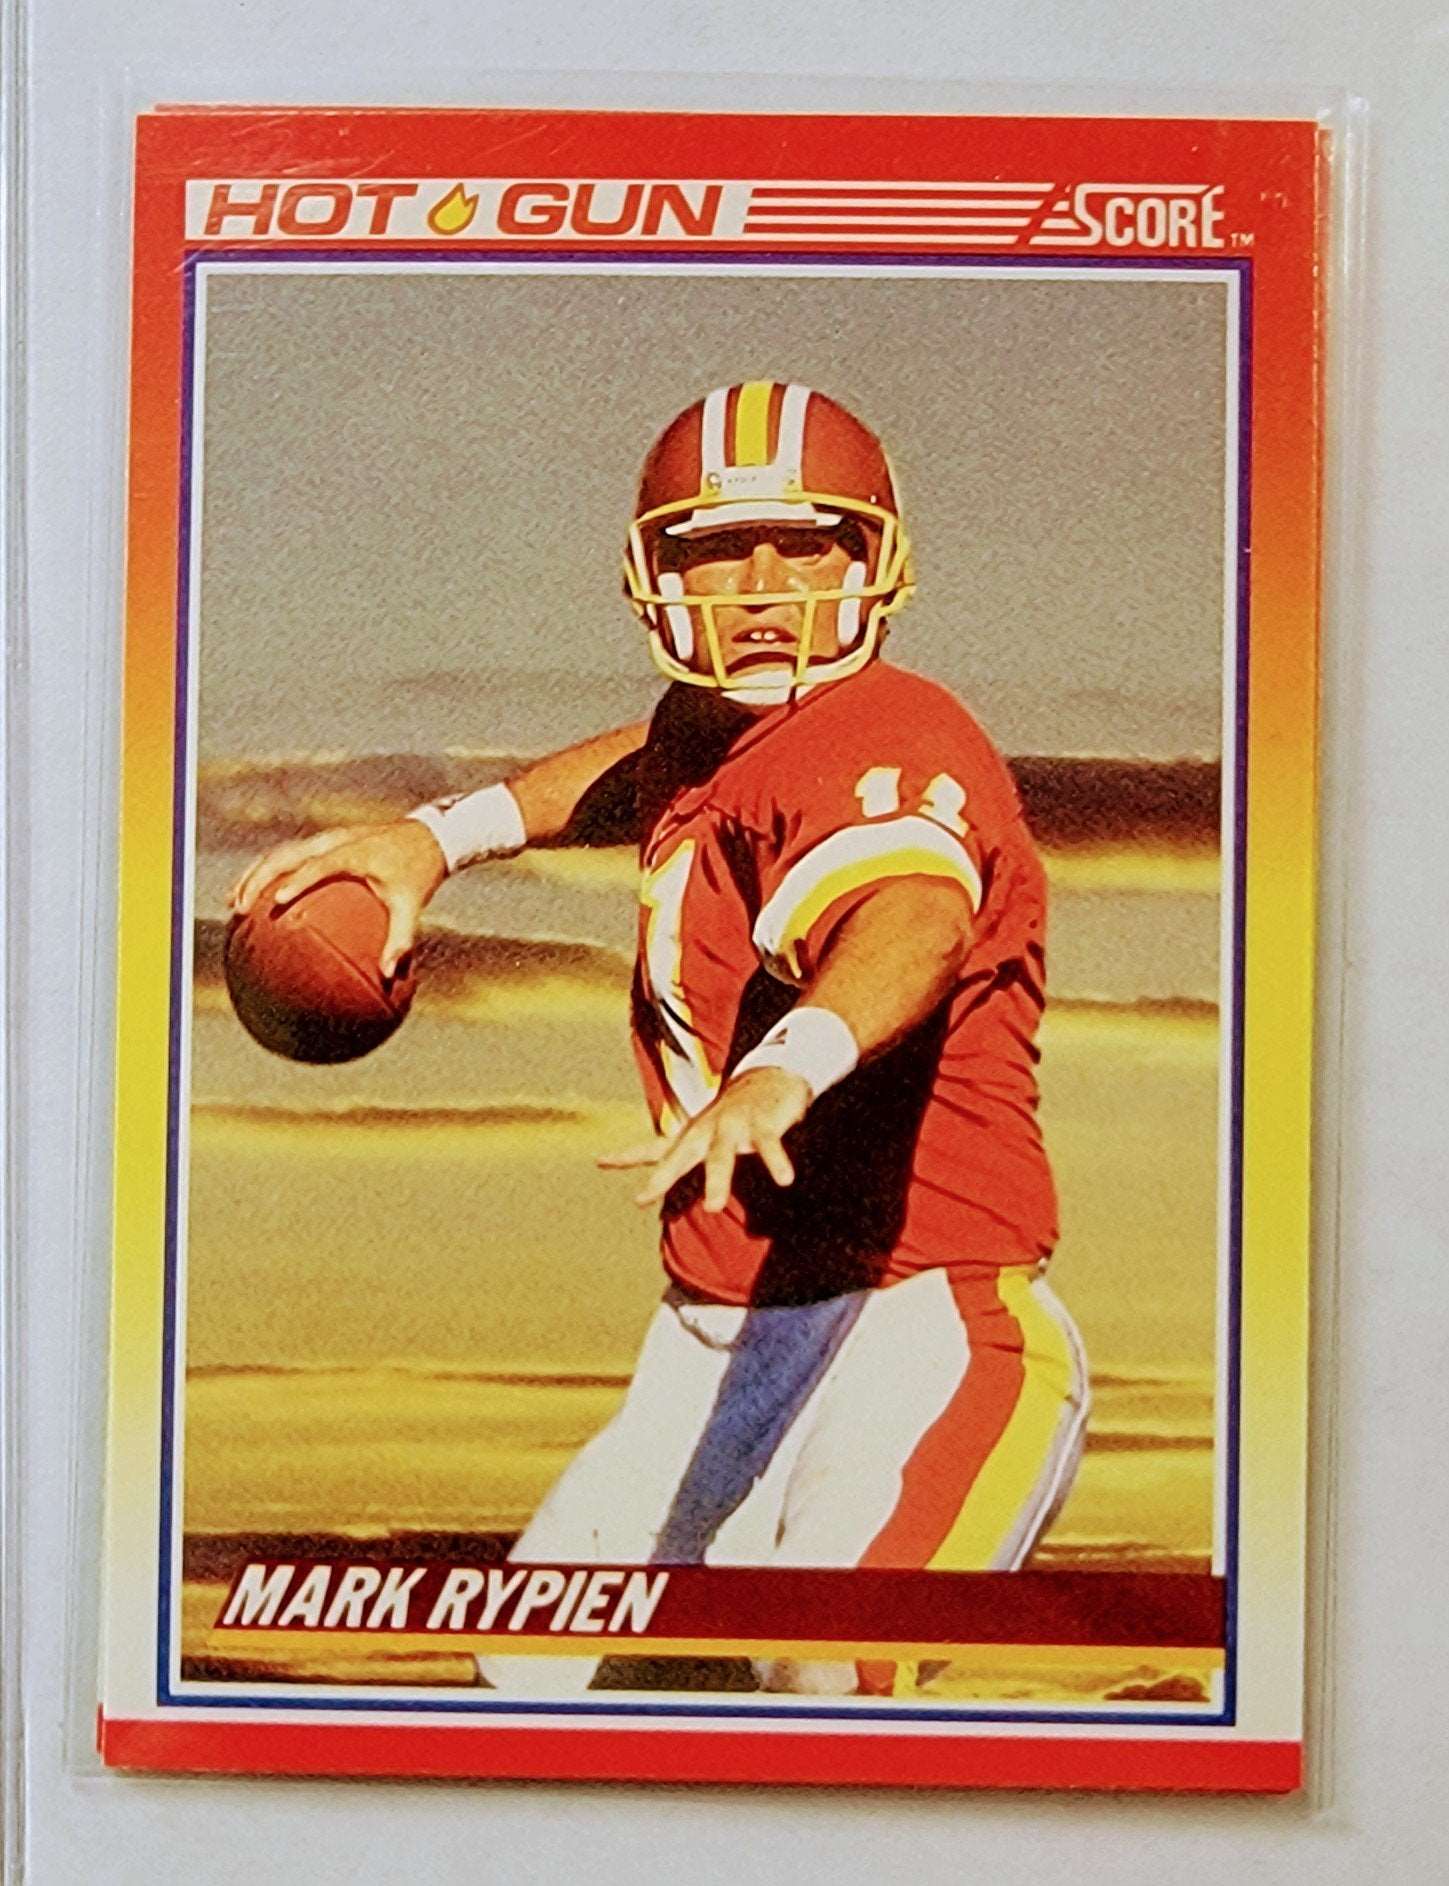 1990 Score Mark Rypien Hot Gun Insert Football Card AVM1 simple Xclusive Collectibles   